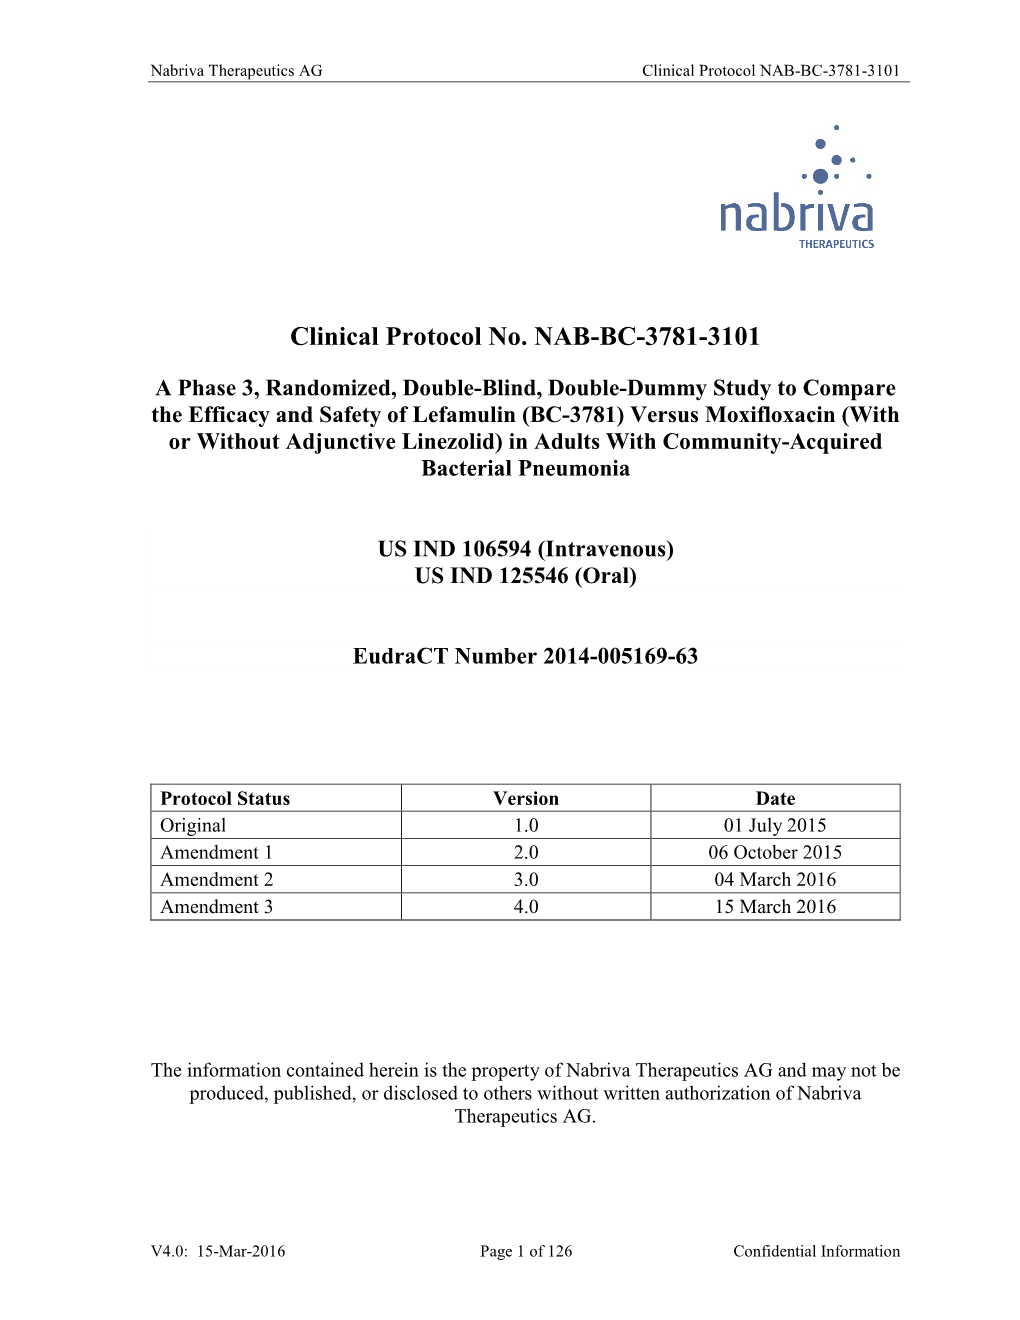 Clinical Protocol No. NAB-BC-3781-3101